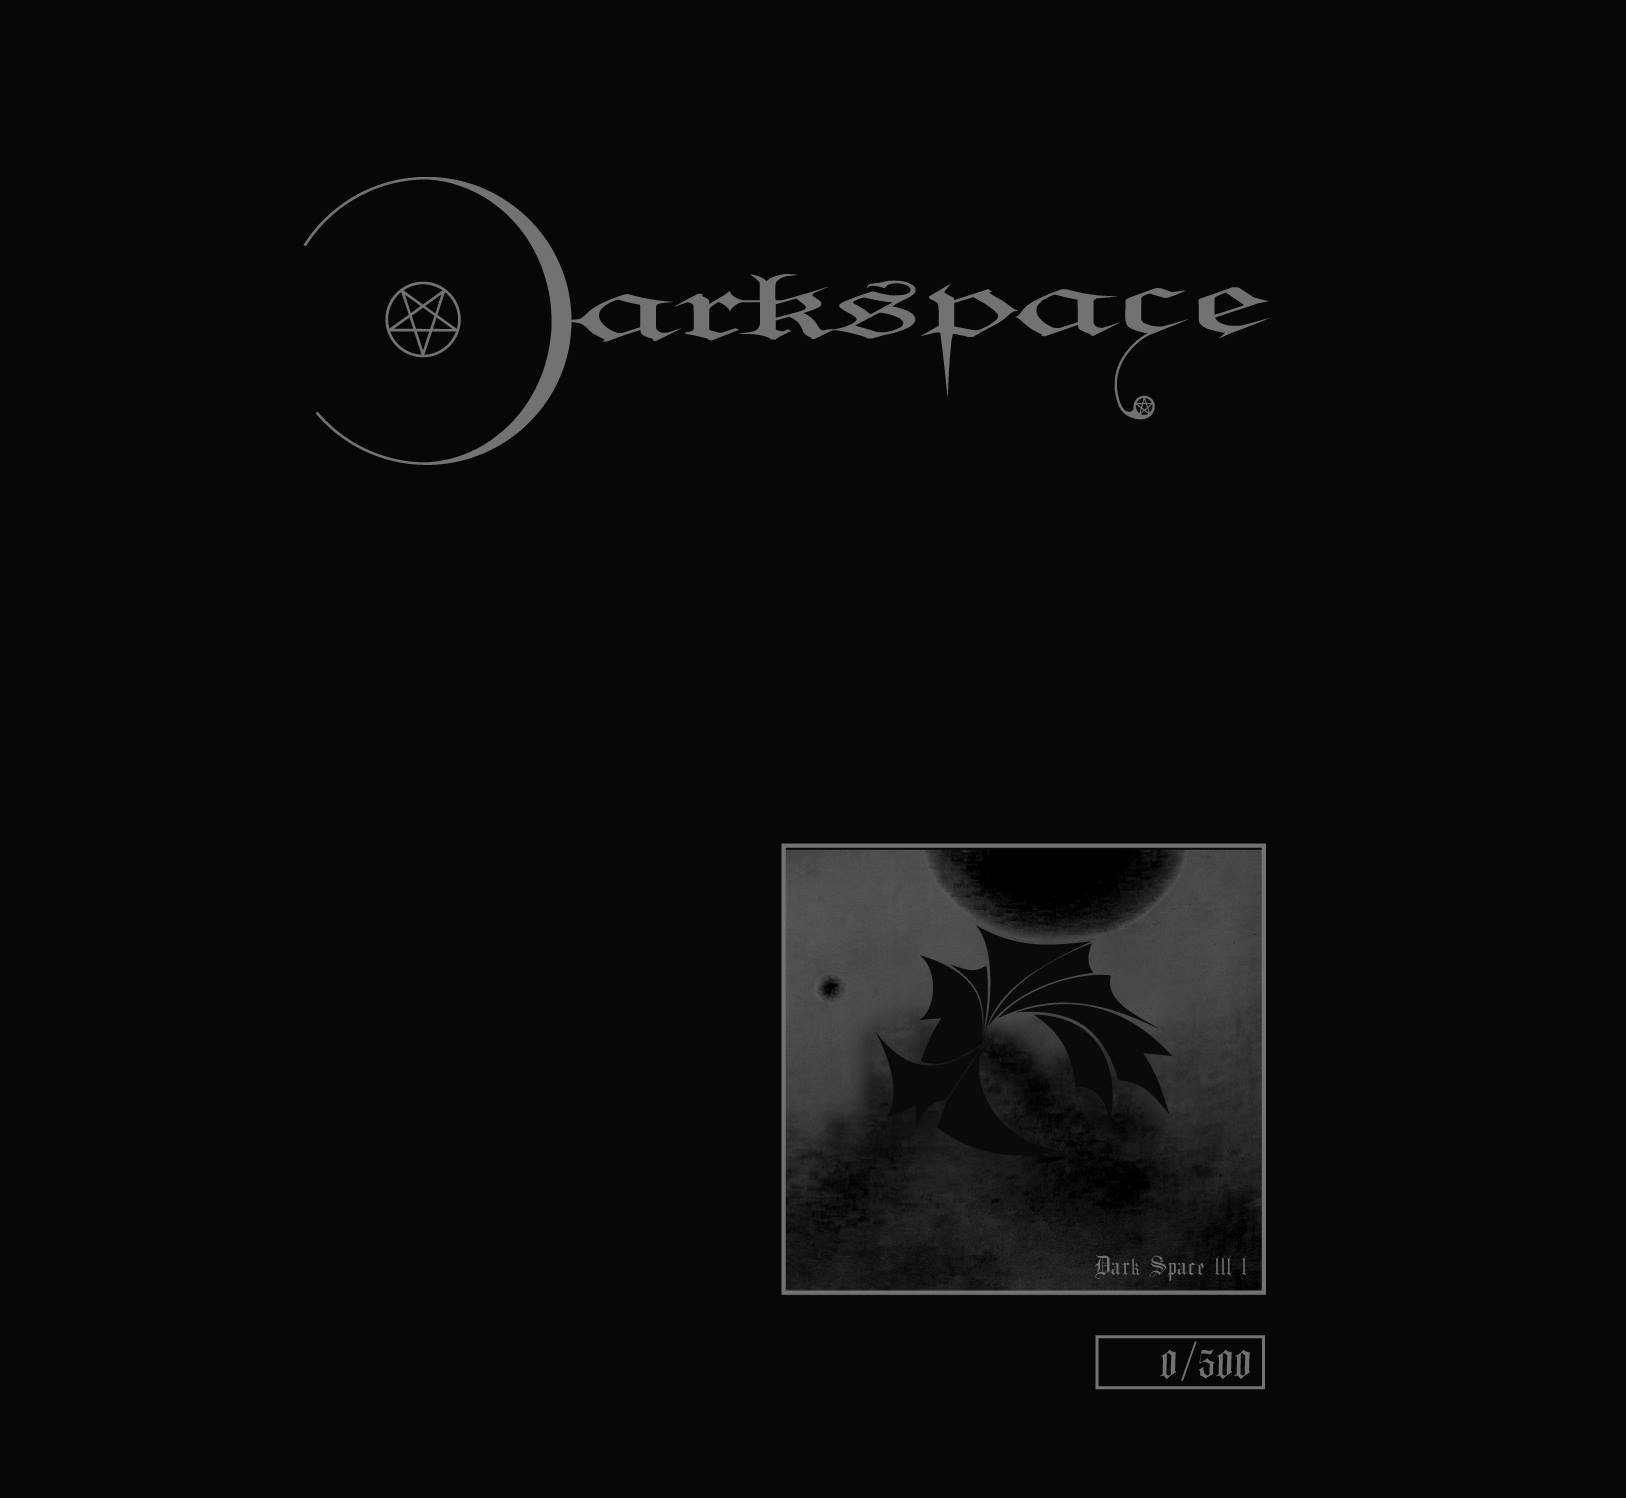 Darkspace – Dark Space III I Review